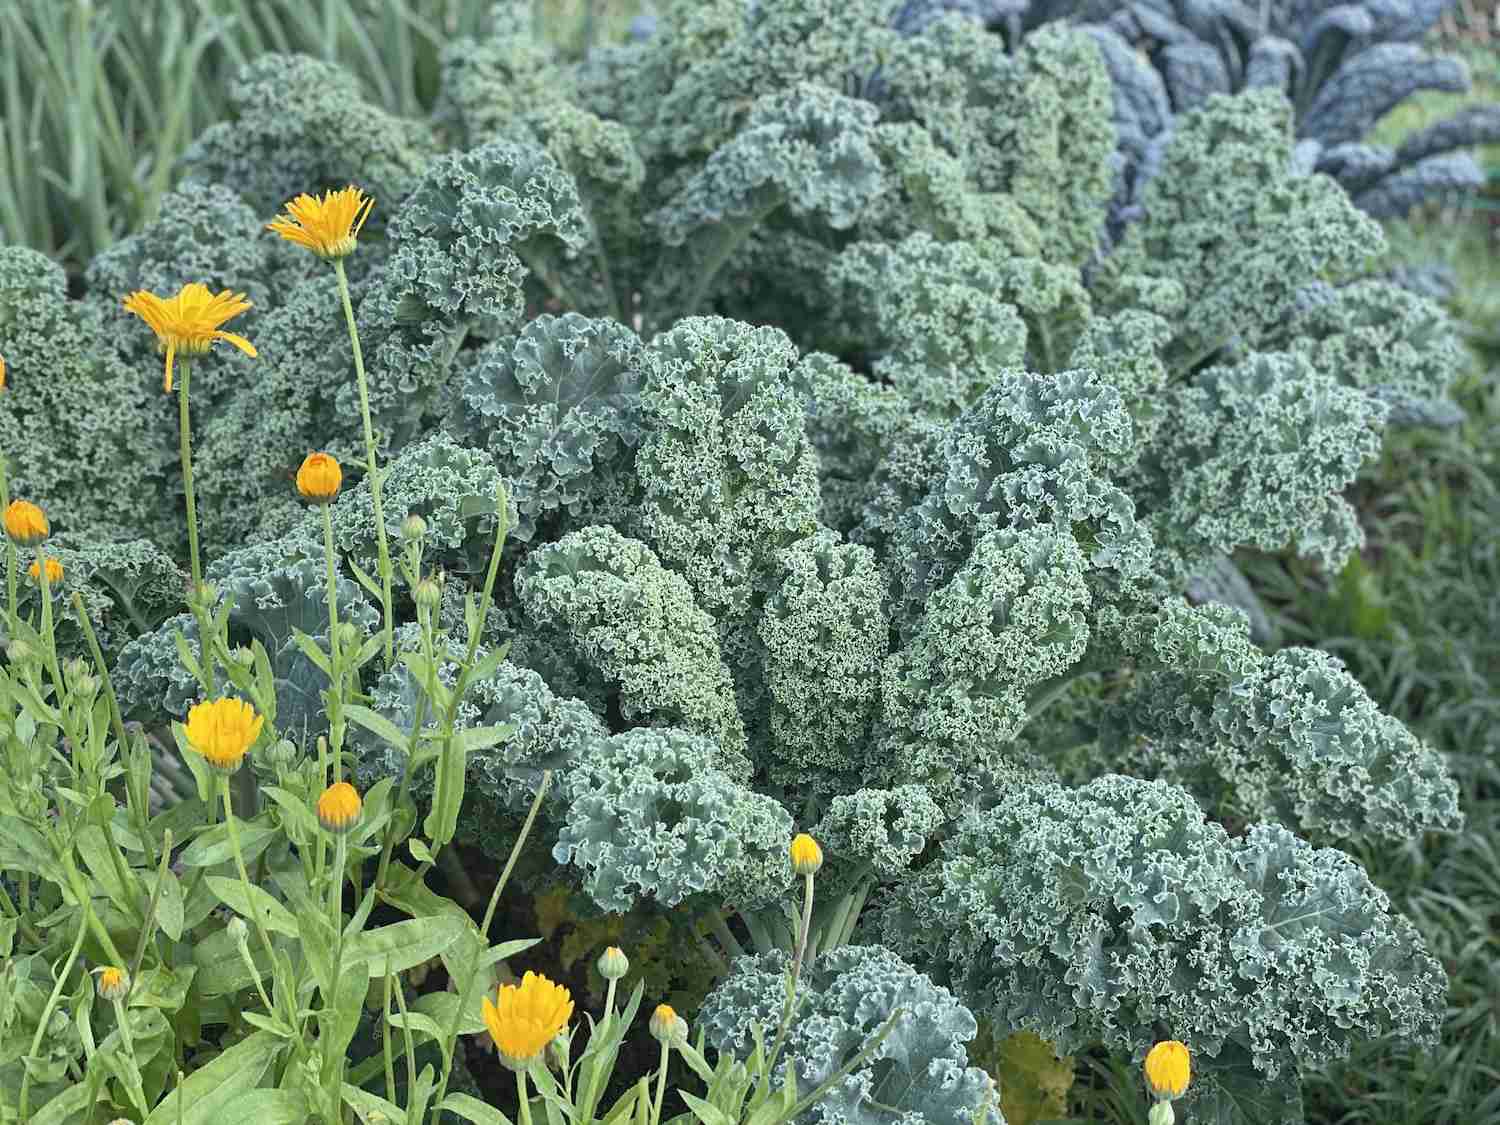 A photo of kale as a companion plant